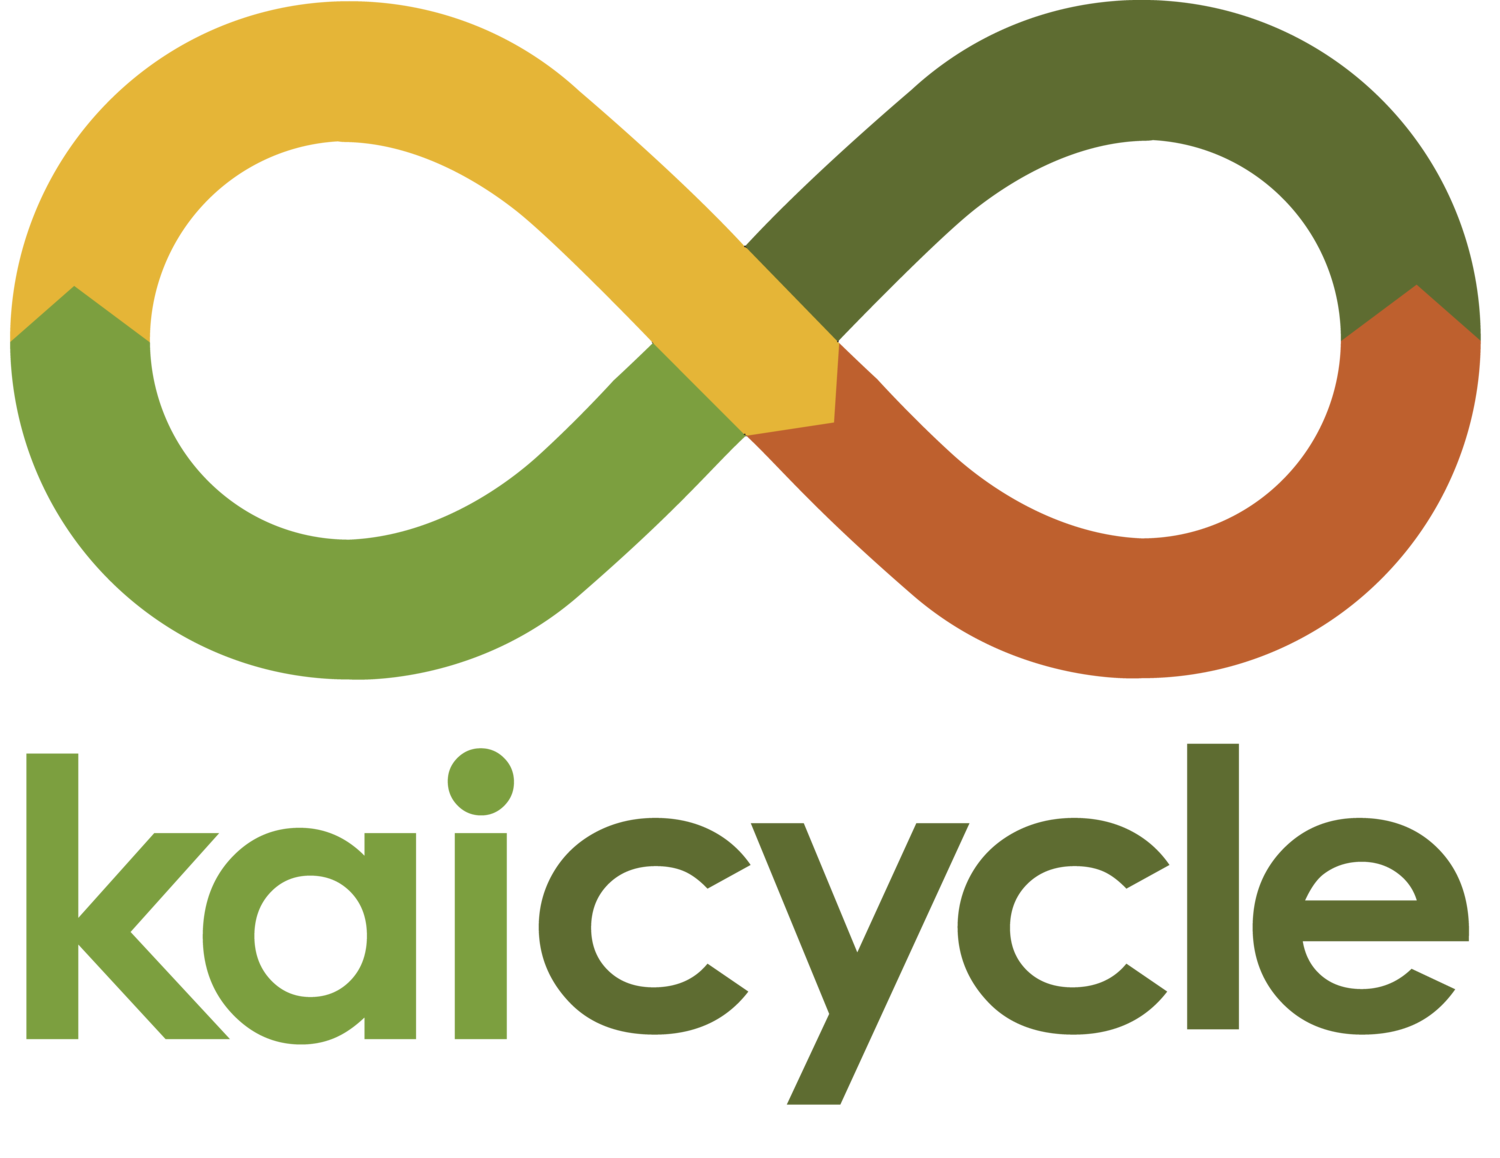 Kaicycle